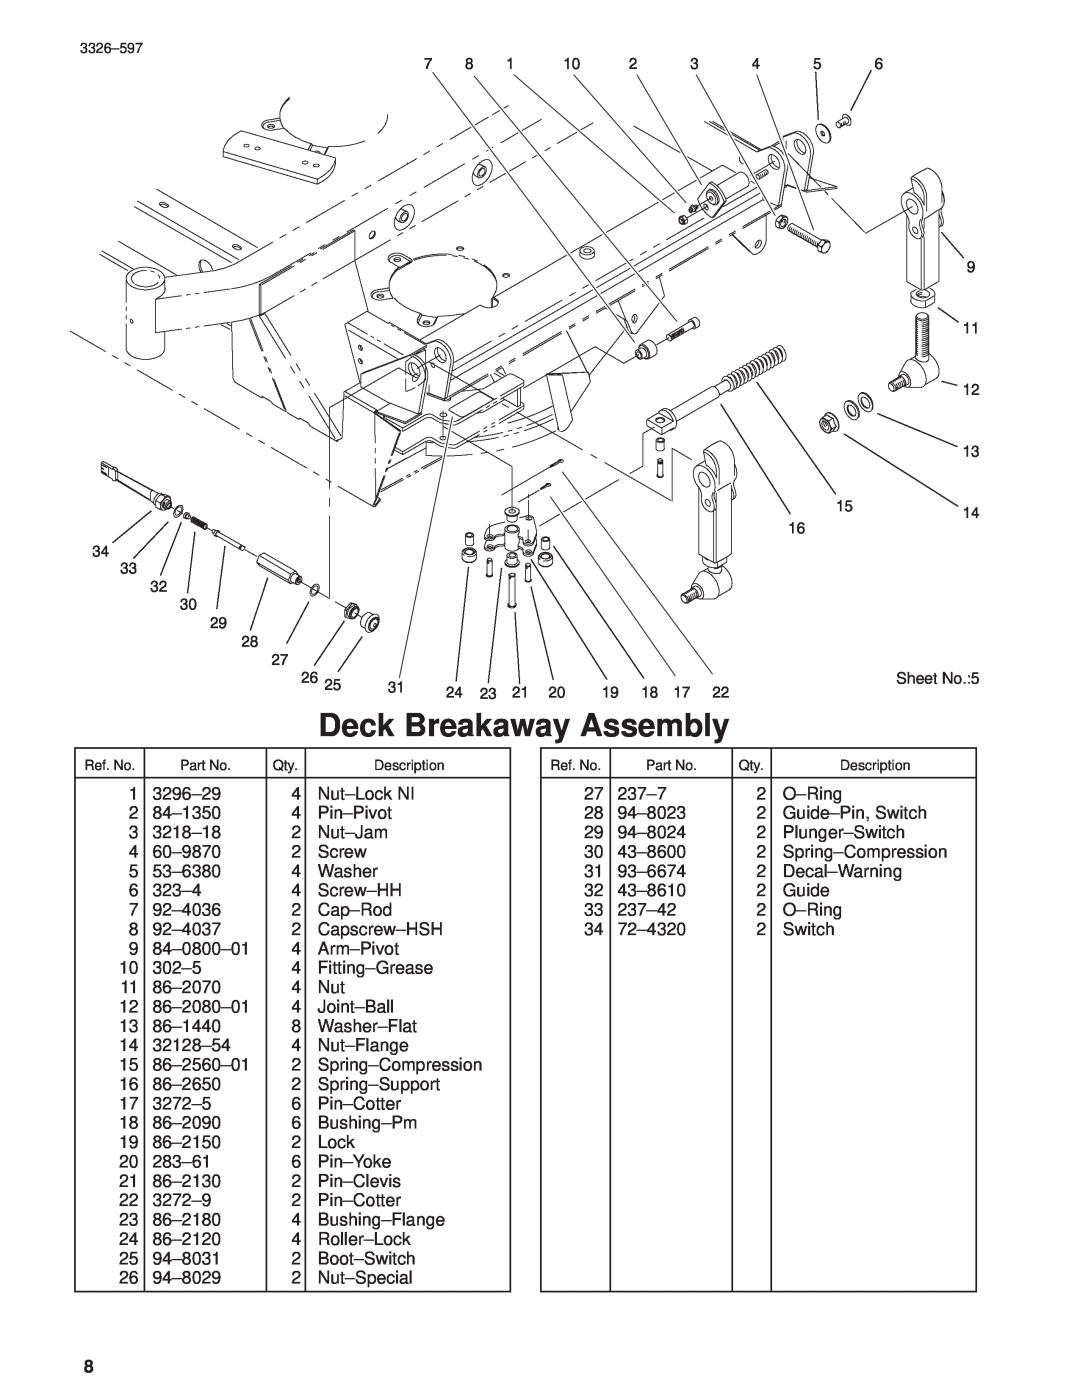 Toro 30402210000001 and Up manual Deck Breakaway Assembly, Sheet No.5 